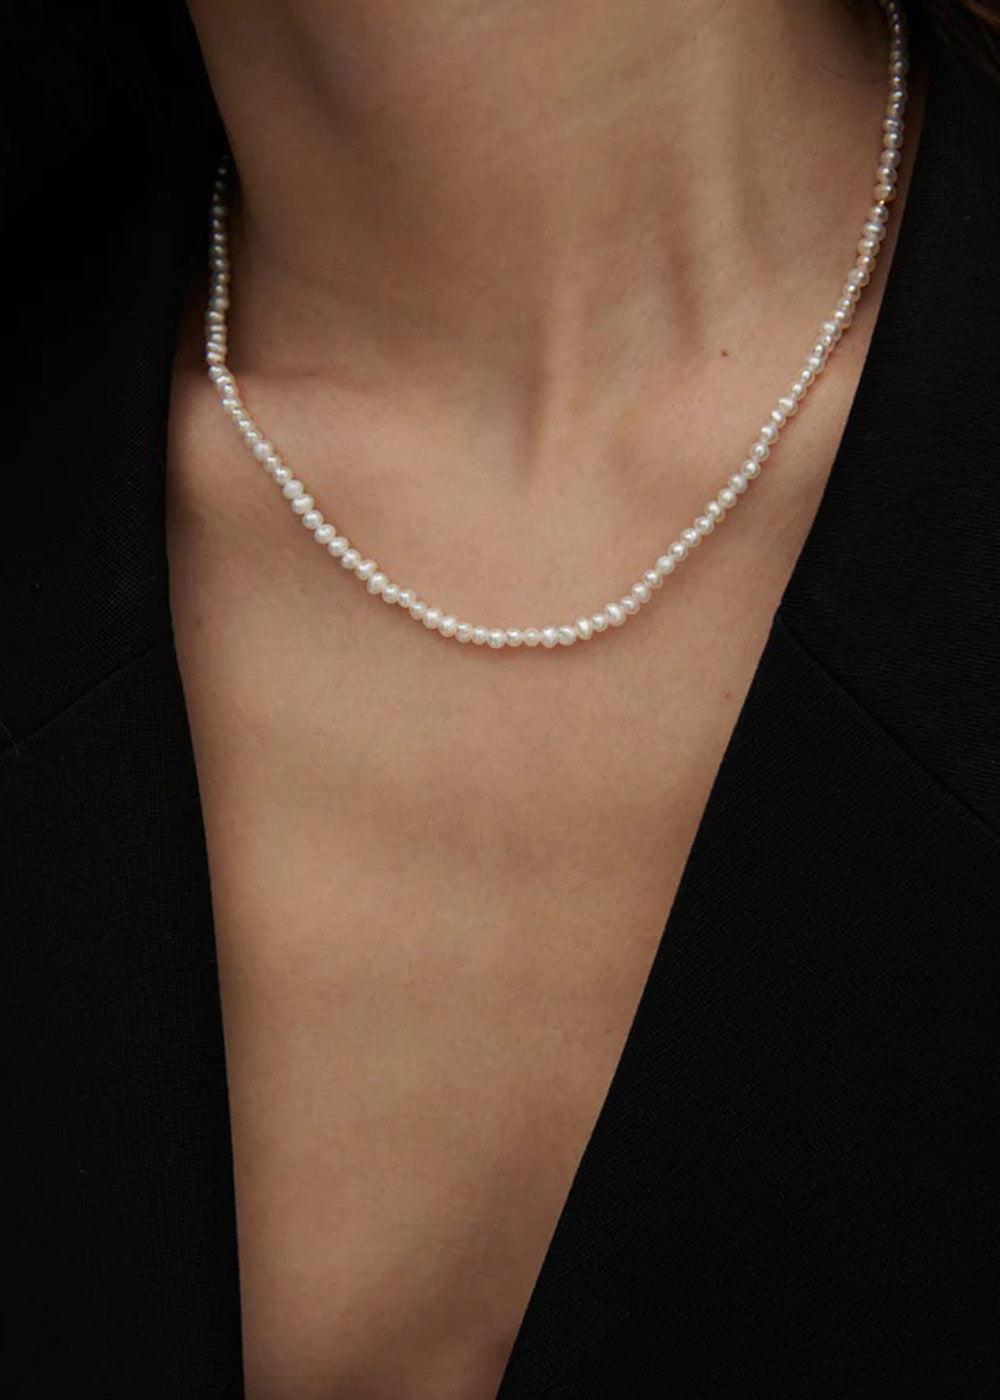 Sky necklace - 925 Sterling Silver